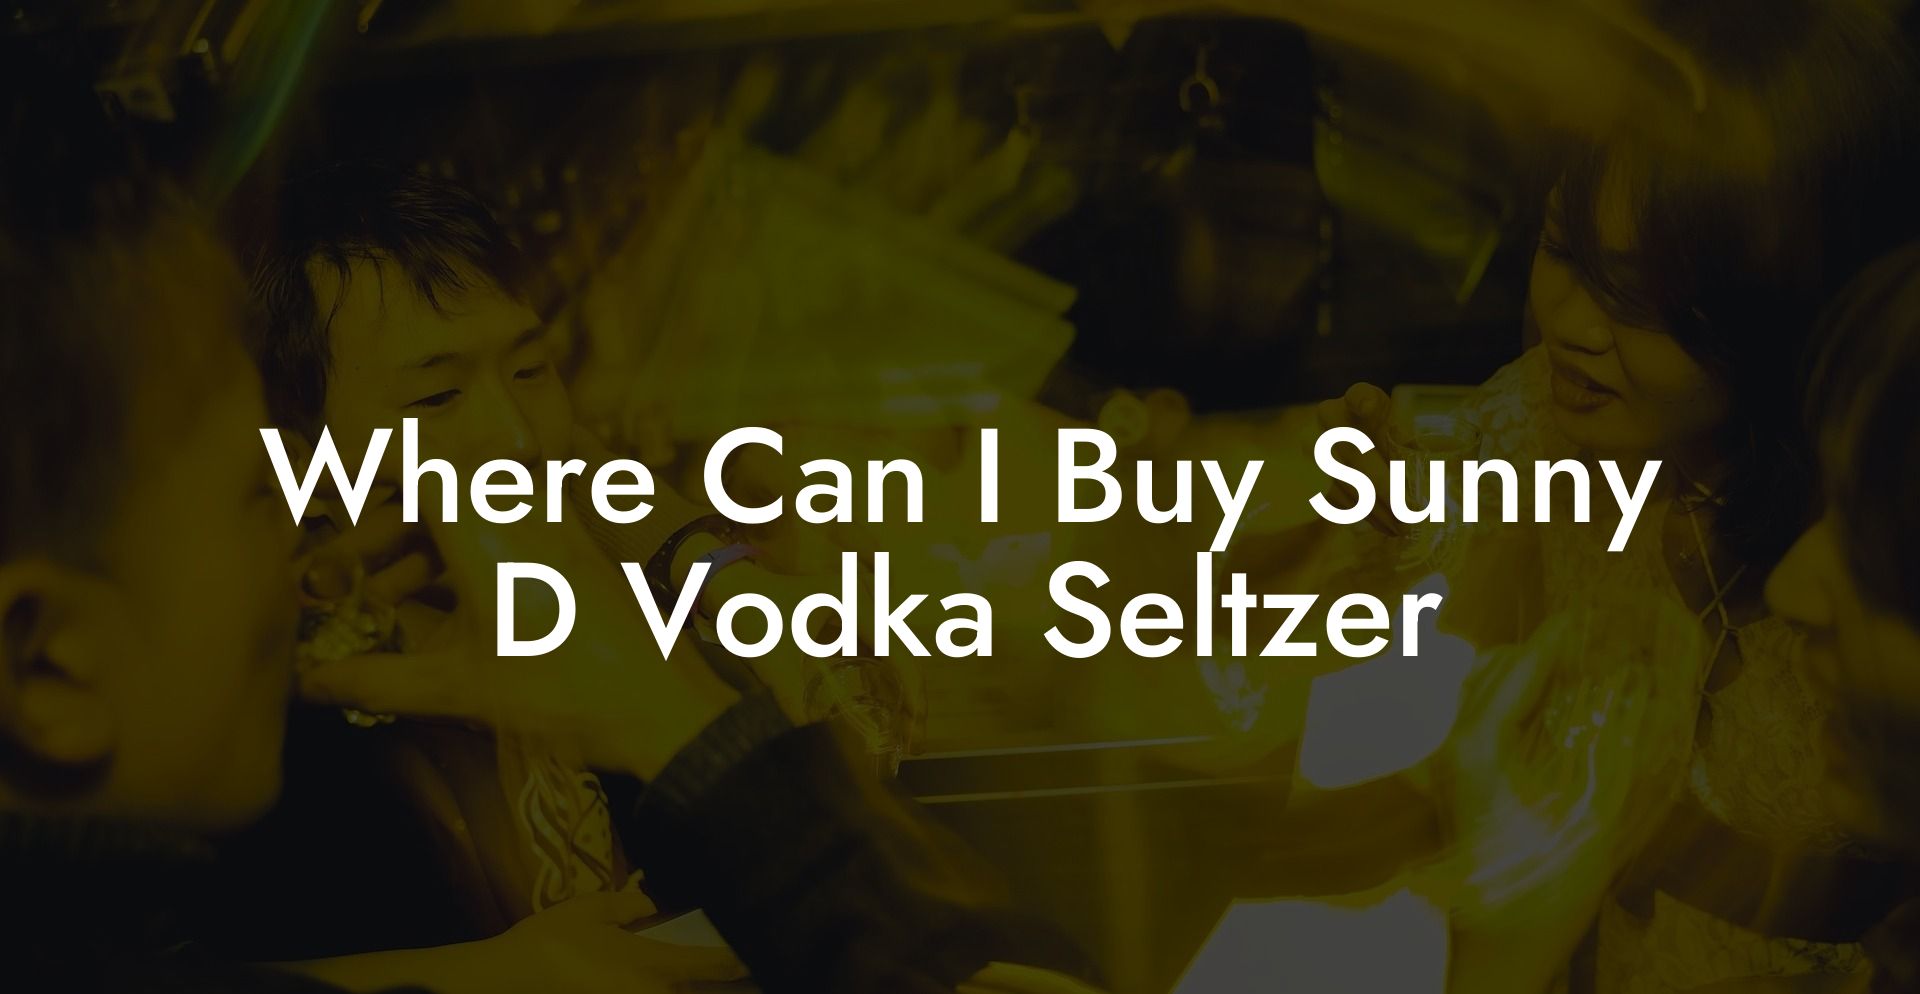 Where Can I Buy Sunny D Vodka Seltzer